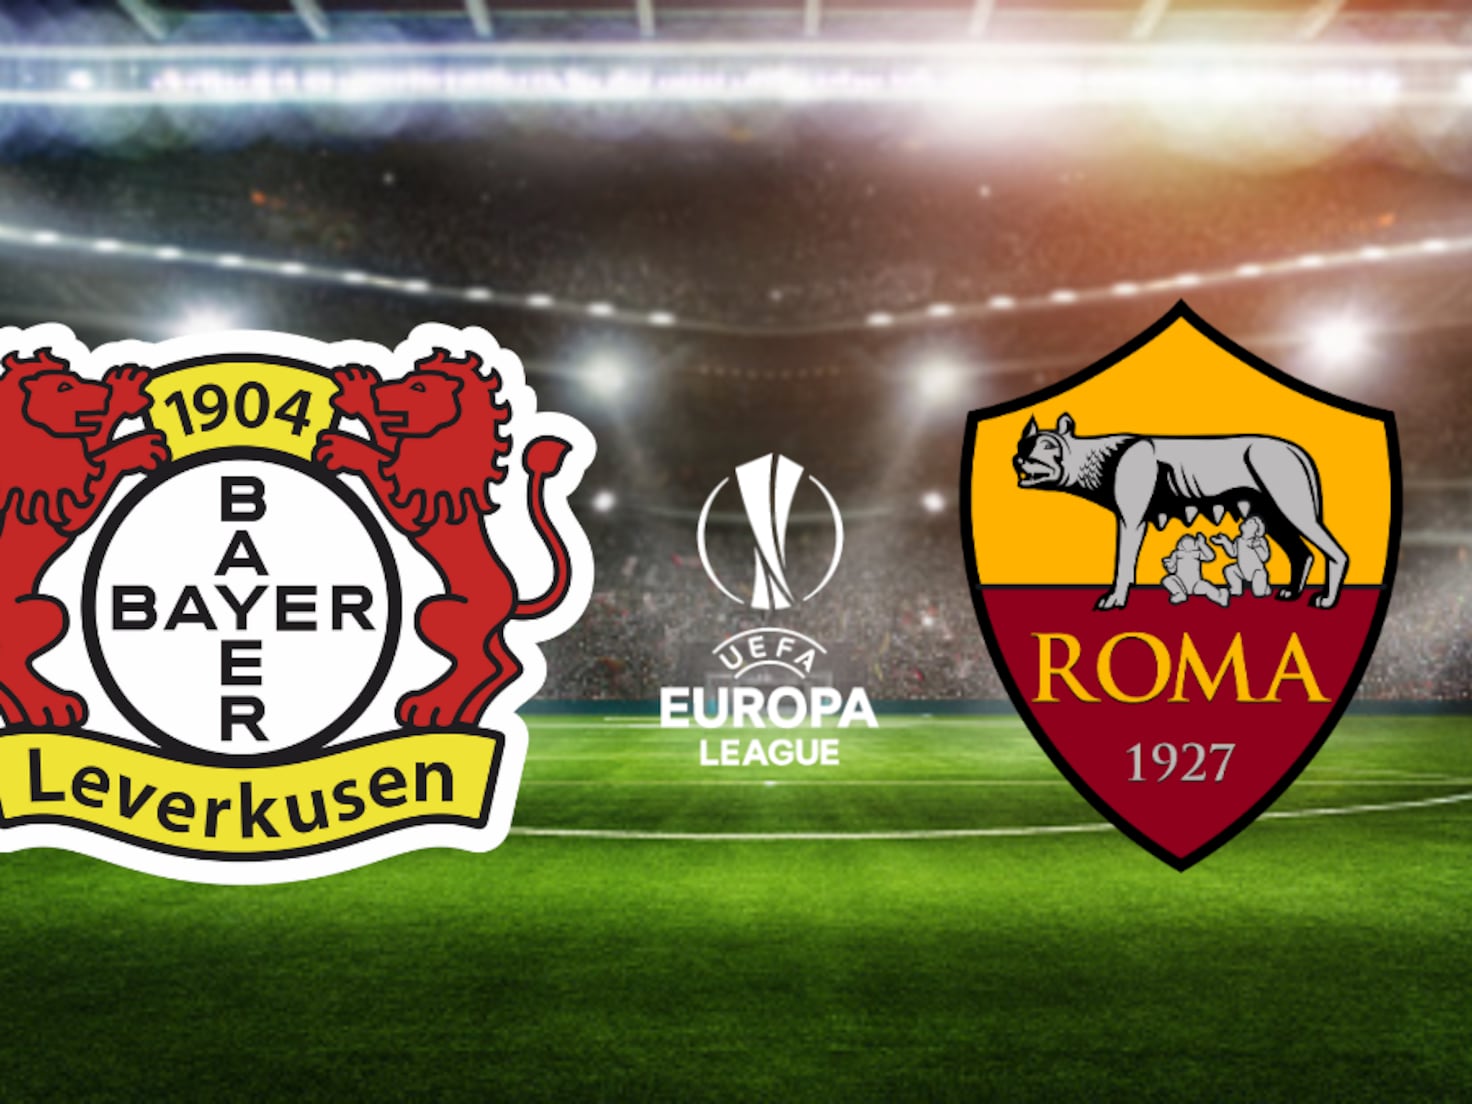 AS Roma will face Leverkusen in Europa League